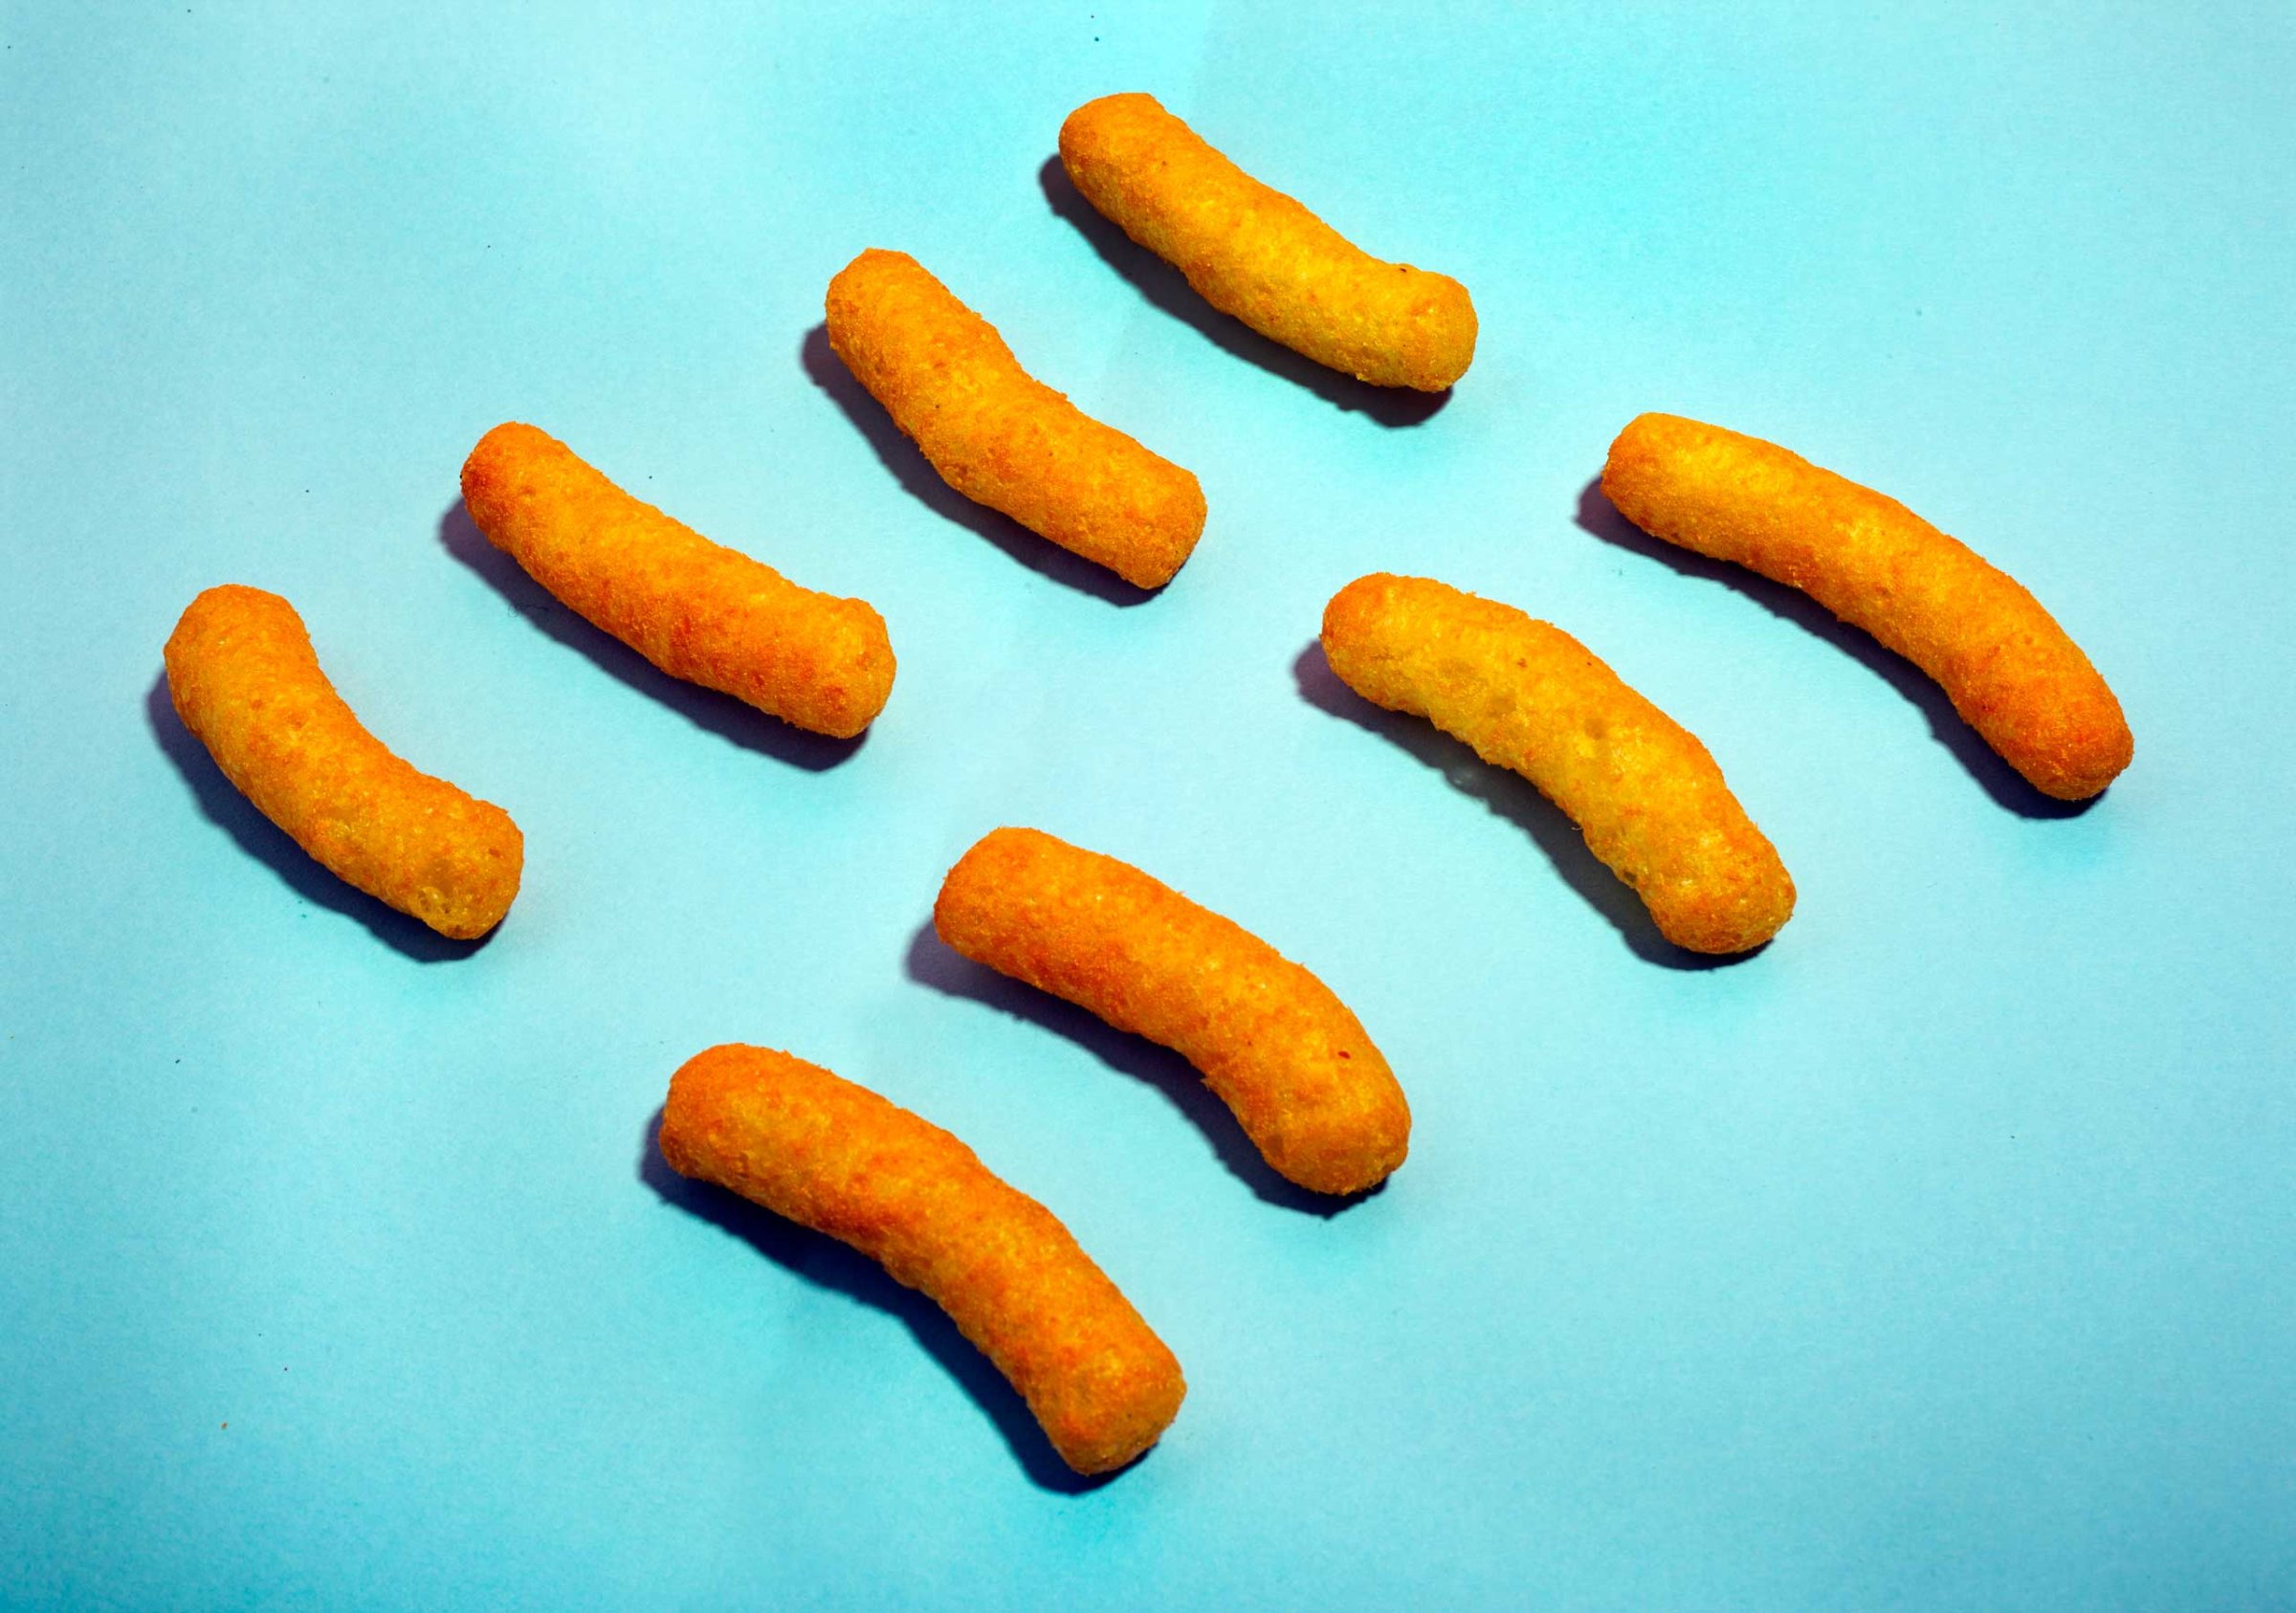 TIME.com stock photos Food Snacks Chips Cheetos